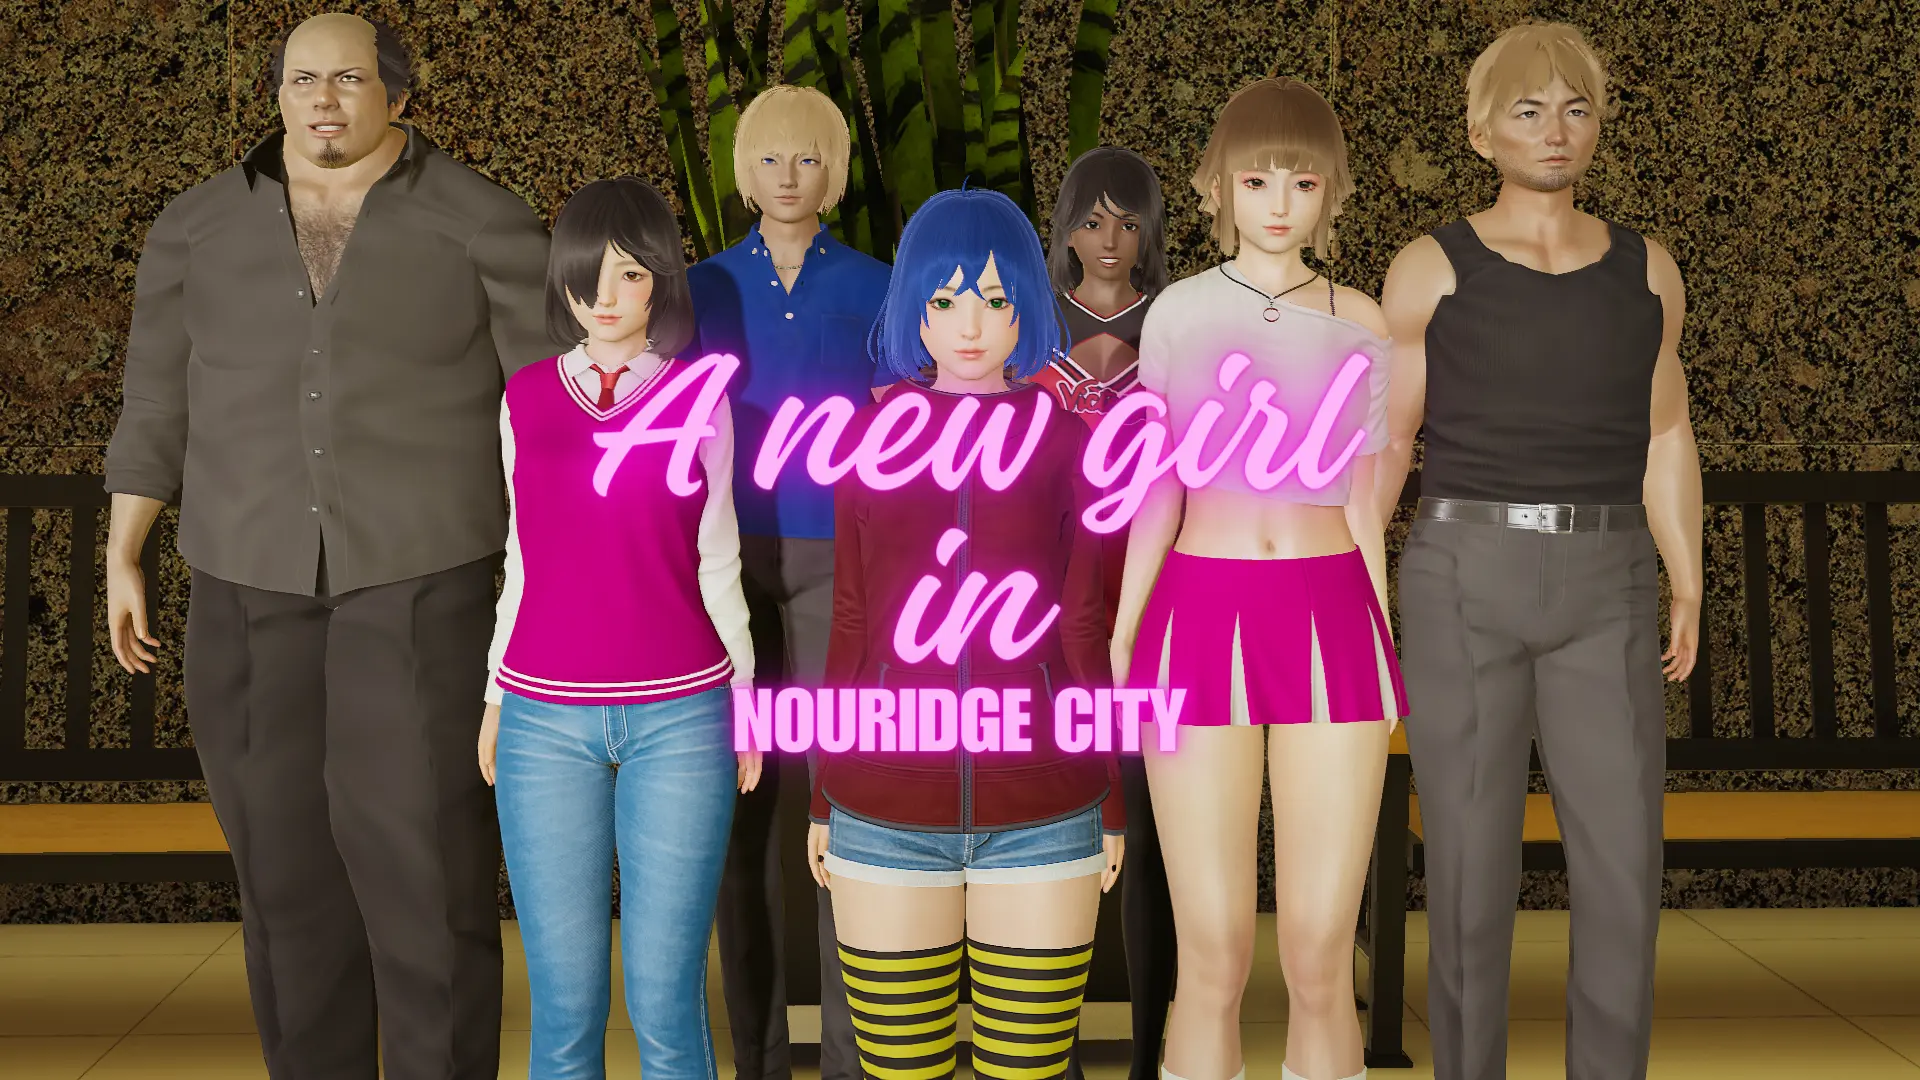 A New Girl in Nouridge City main image